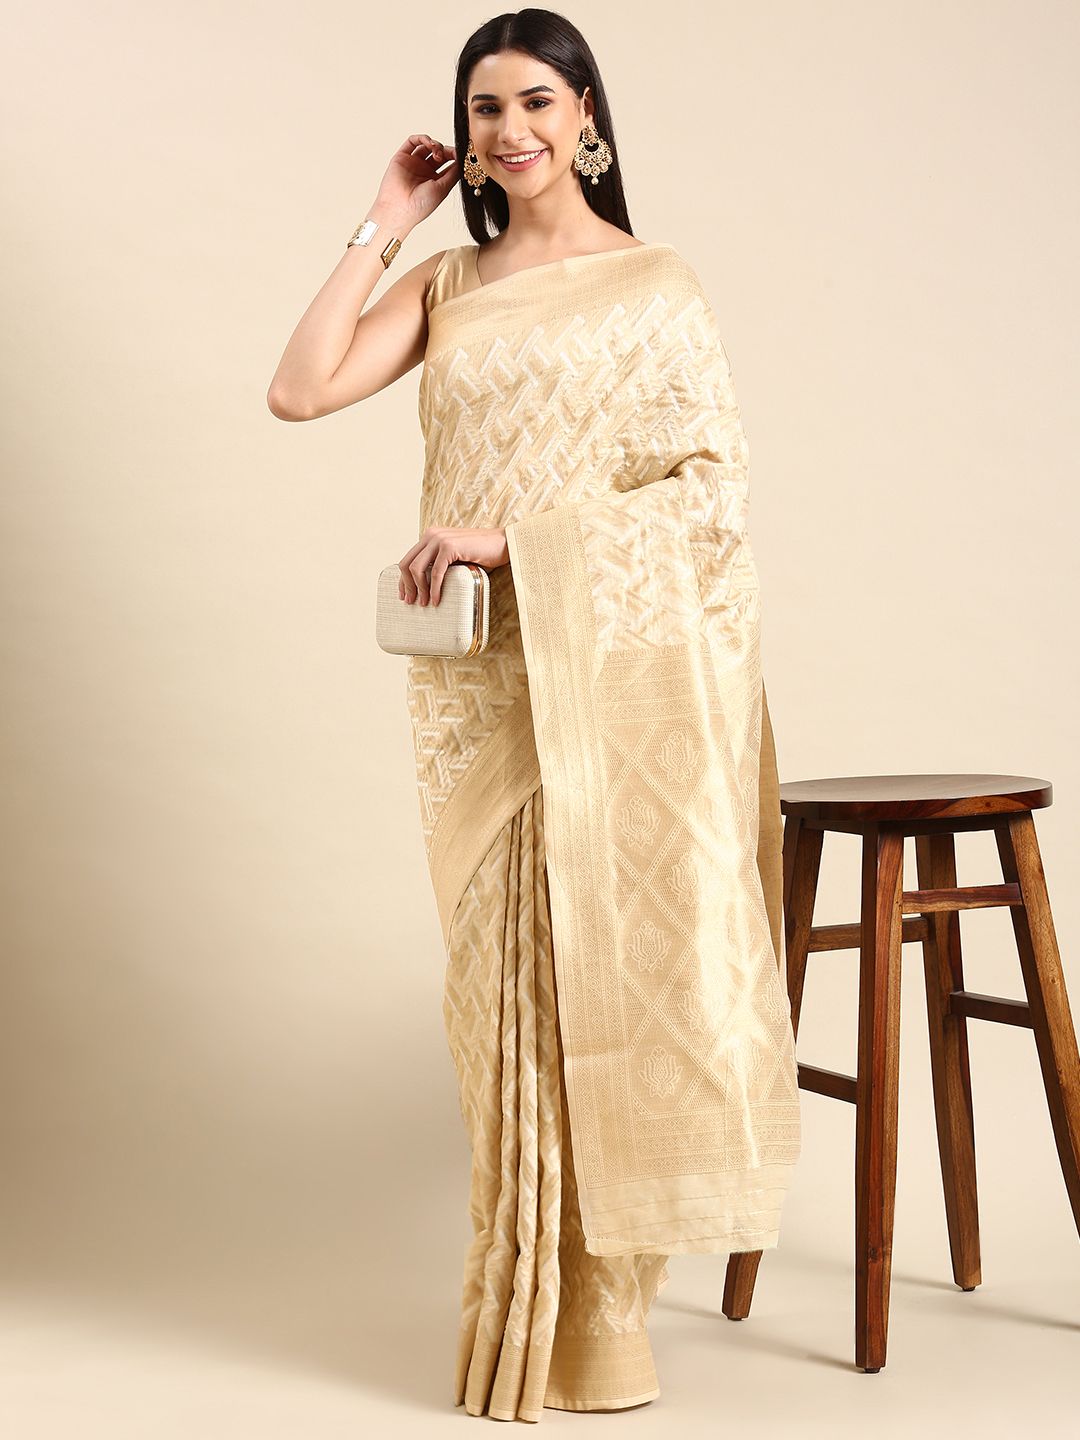 AVANSHEE Woven Design Silk Cotton Kanjeevaram Saree Price in India